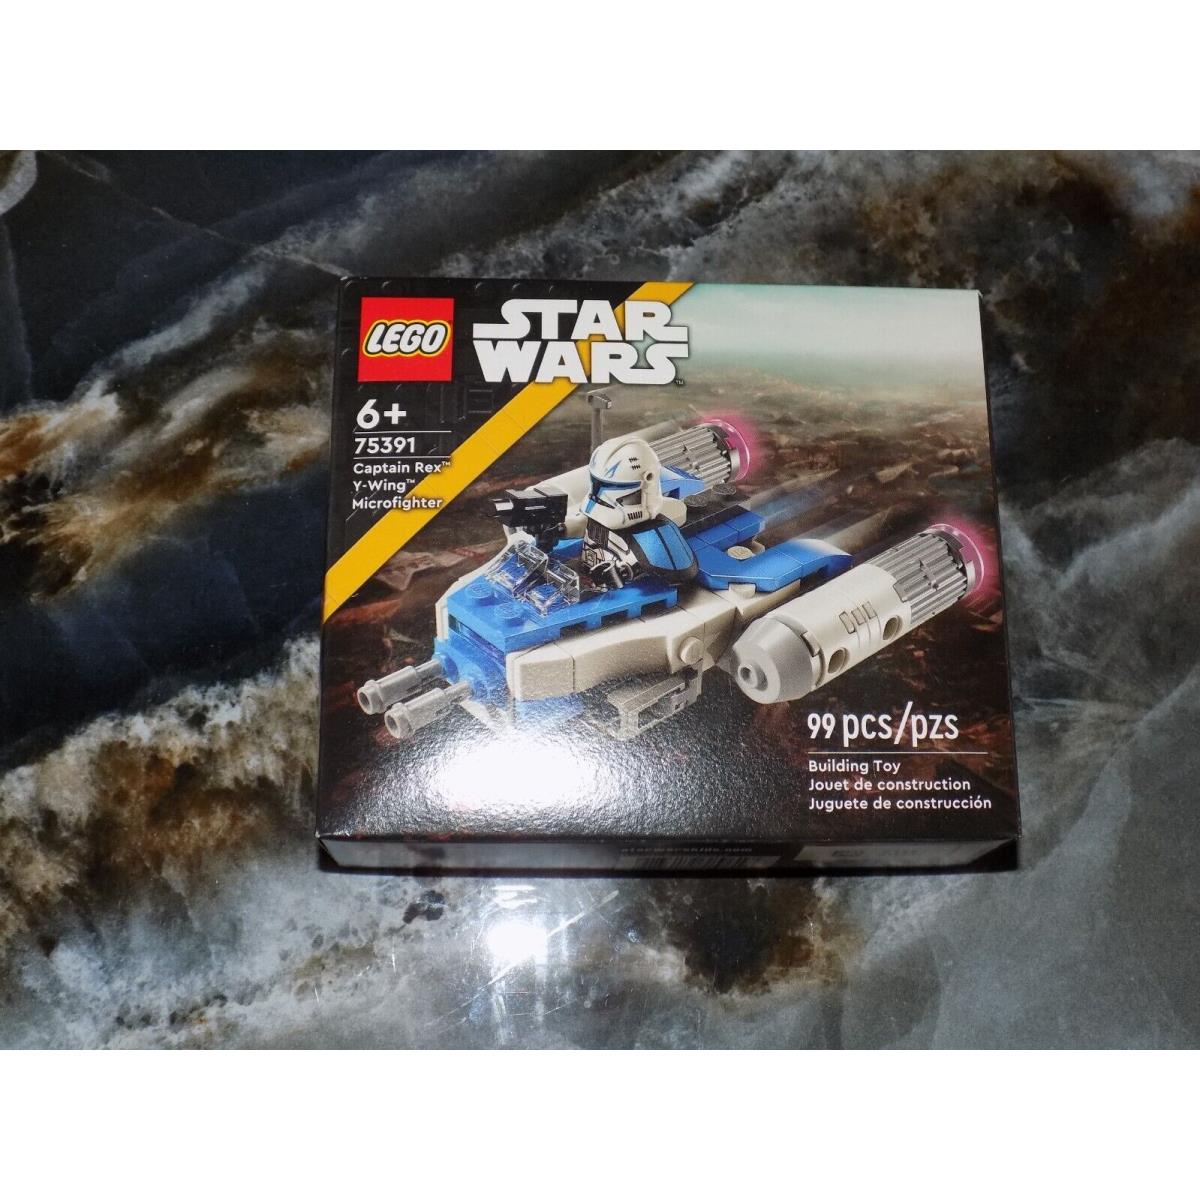 Lego Star Wars Captain Rex Y-wing Microfighter 75391